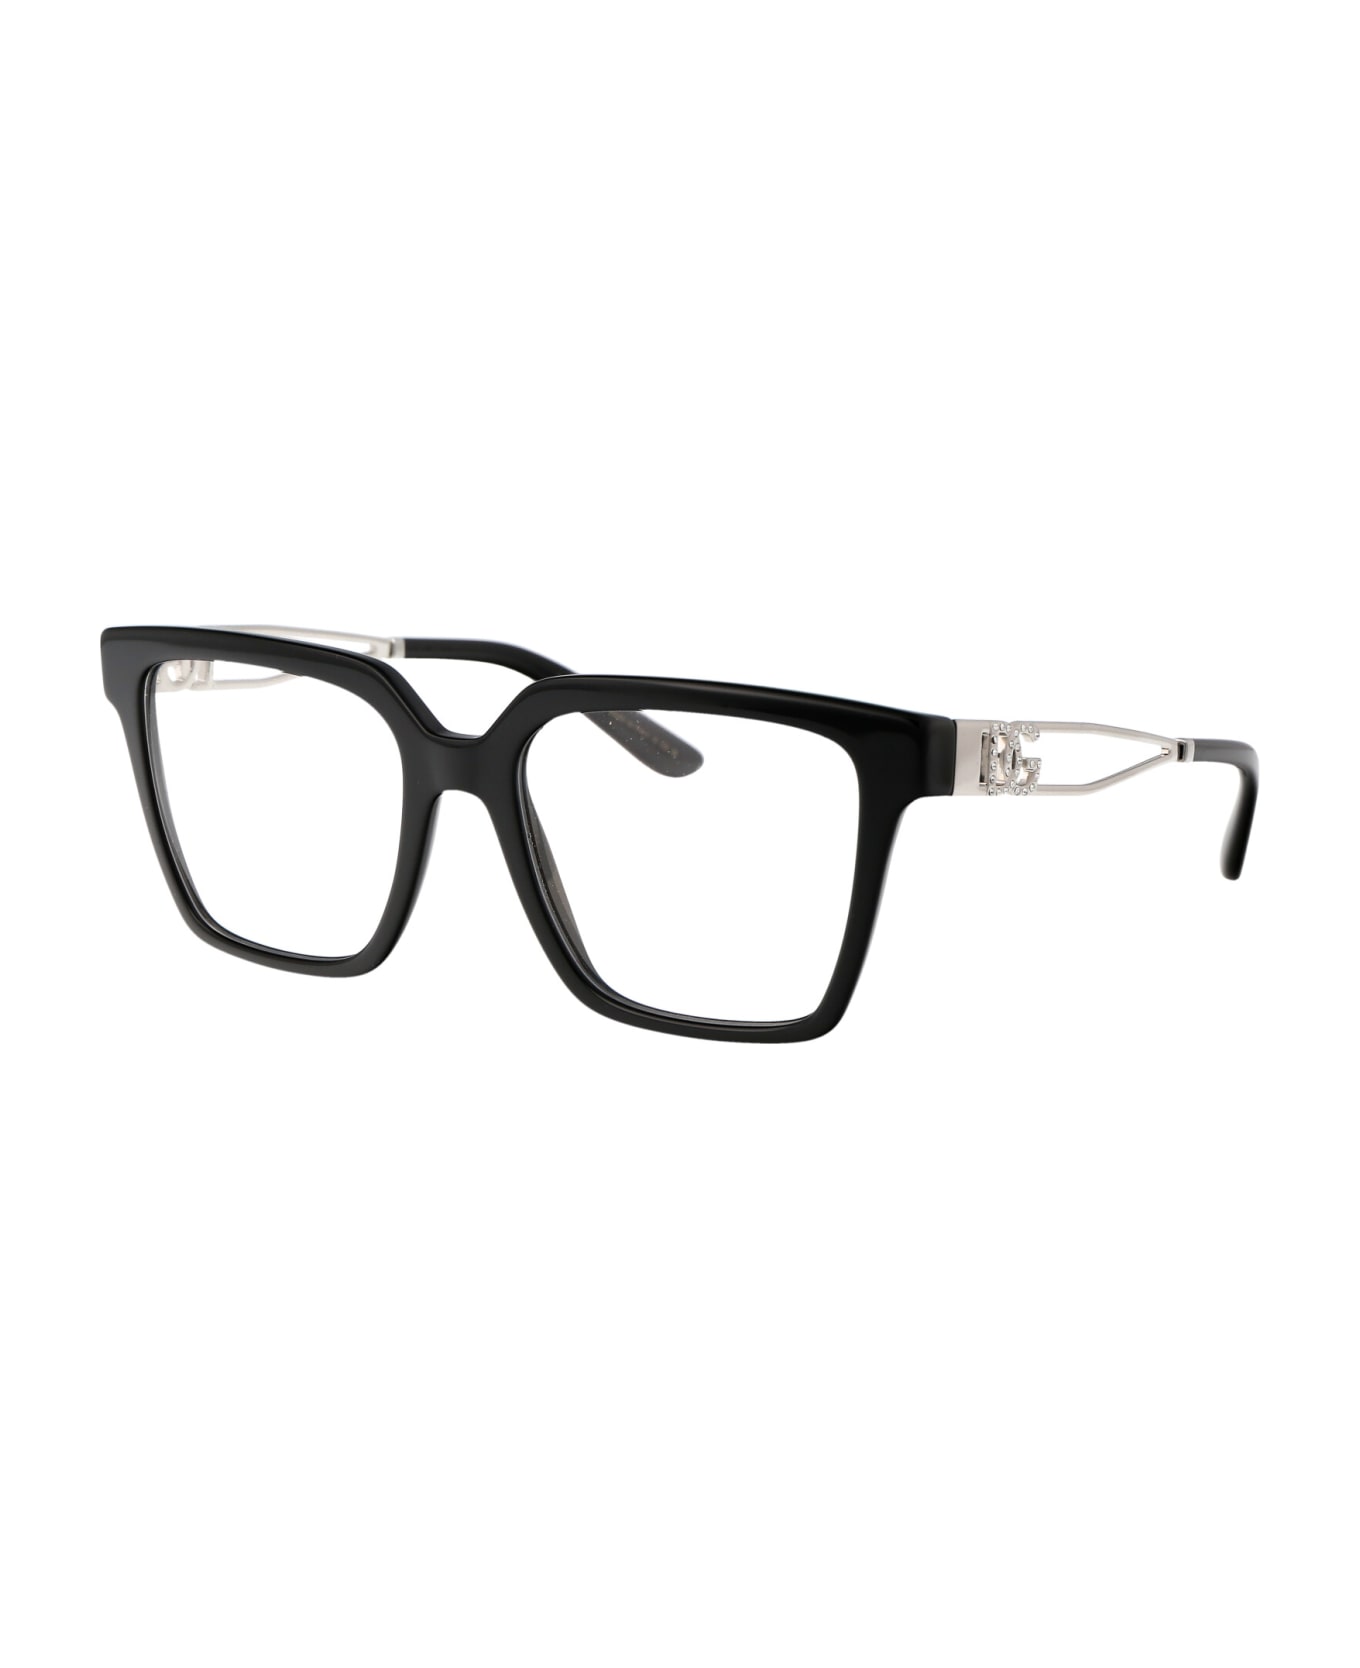 DOLCE & GABBANA LEATHER WALLET WITH LOGO Eyewear 0dg3376b Glasses - 501 BLACK